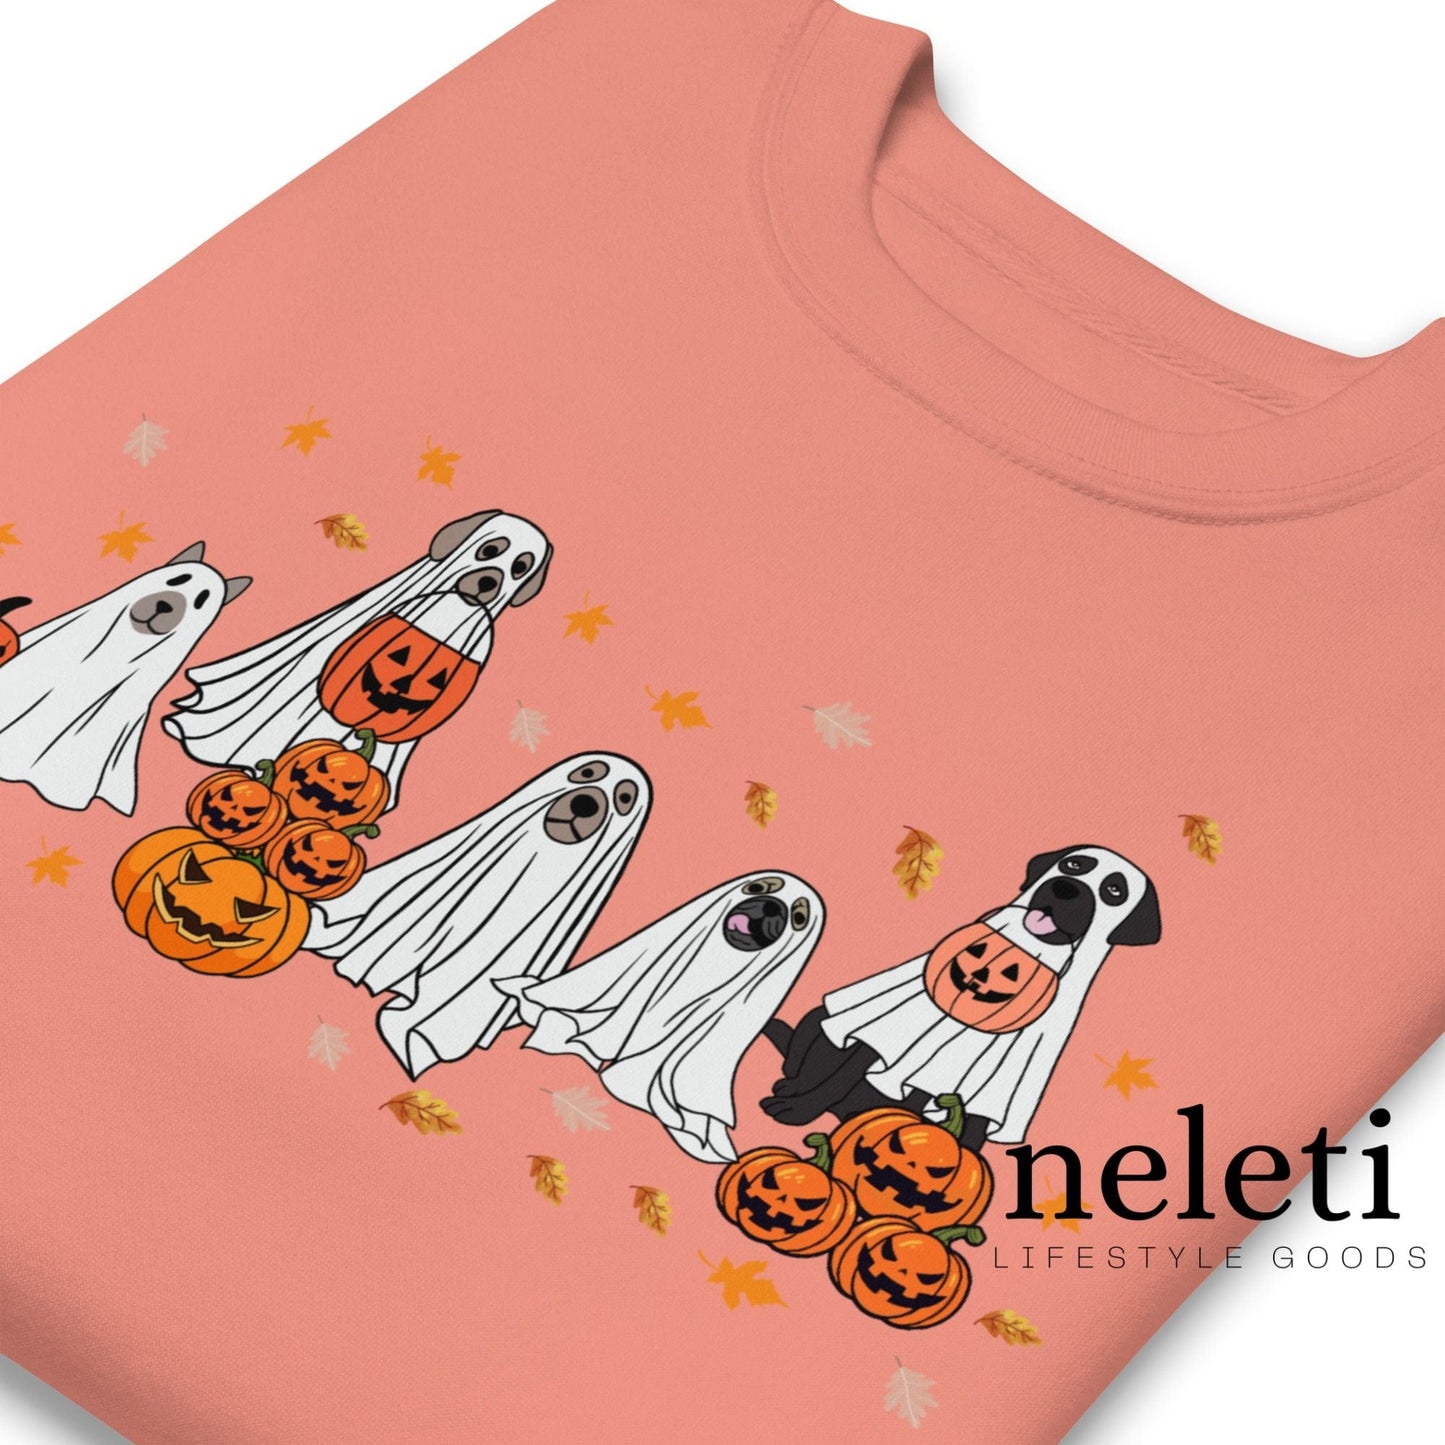 neleti.com-haloween-dusty-rose-sweatshirt-for-dog-lovers